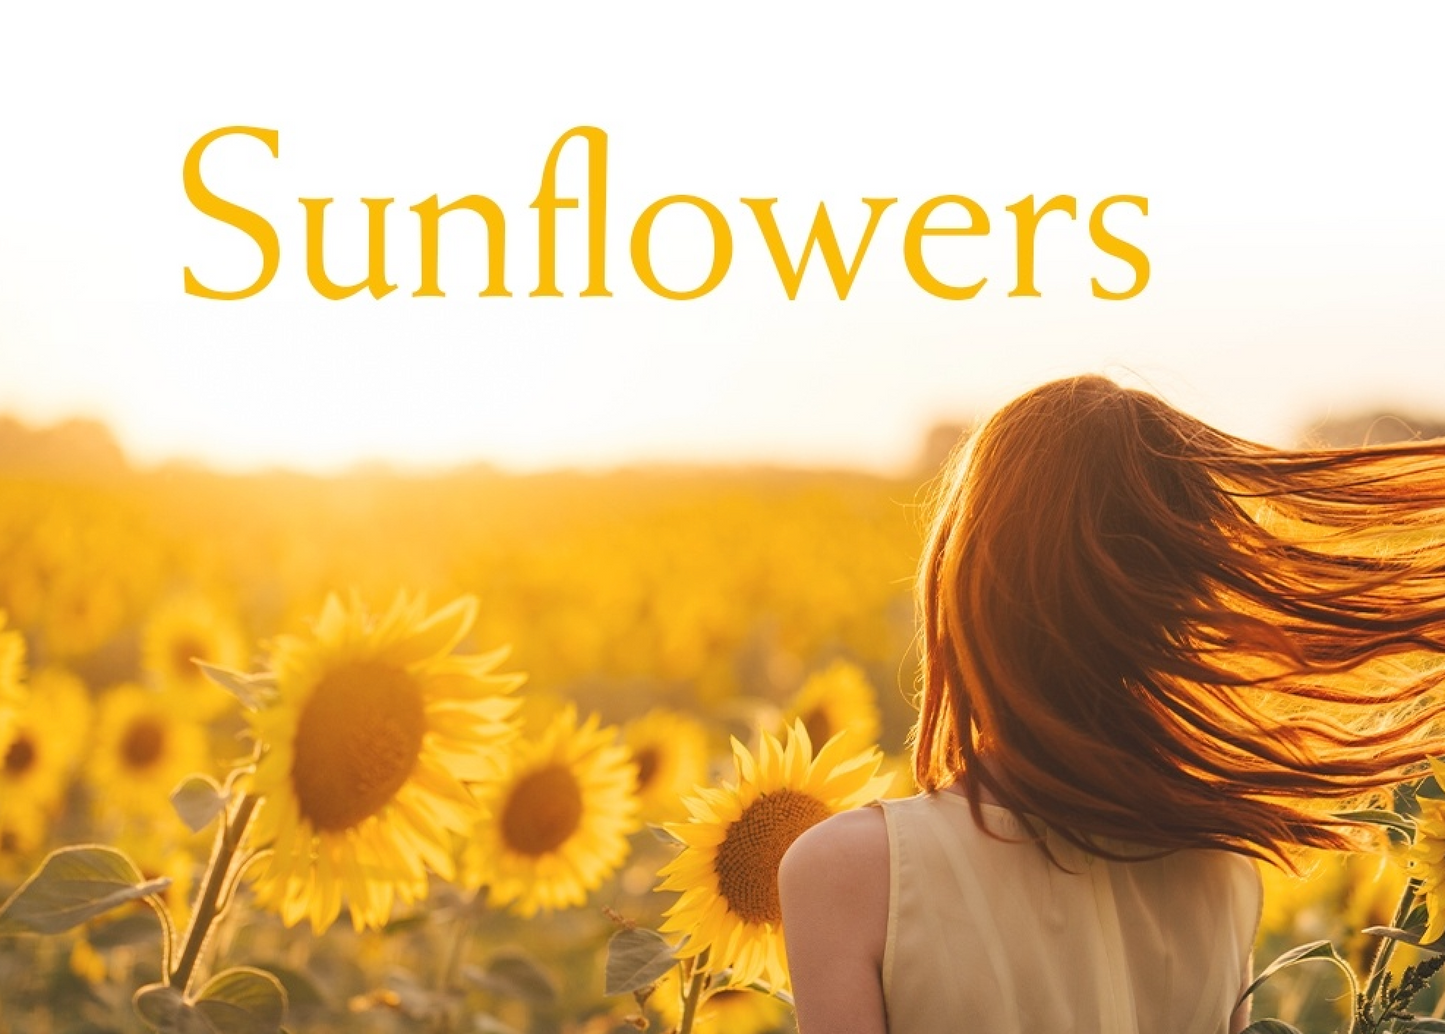 Sunflowers Elizabeth Arden eau de toilette 100ml